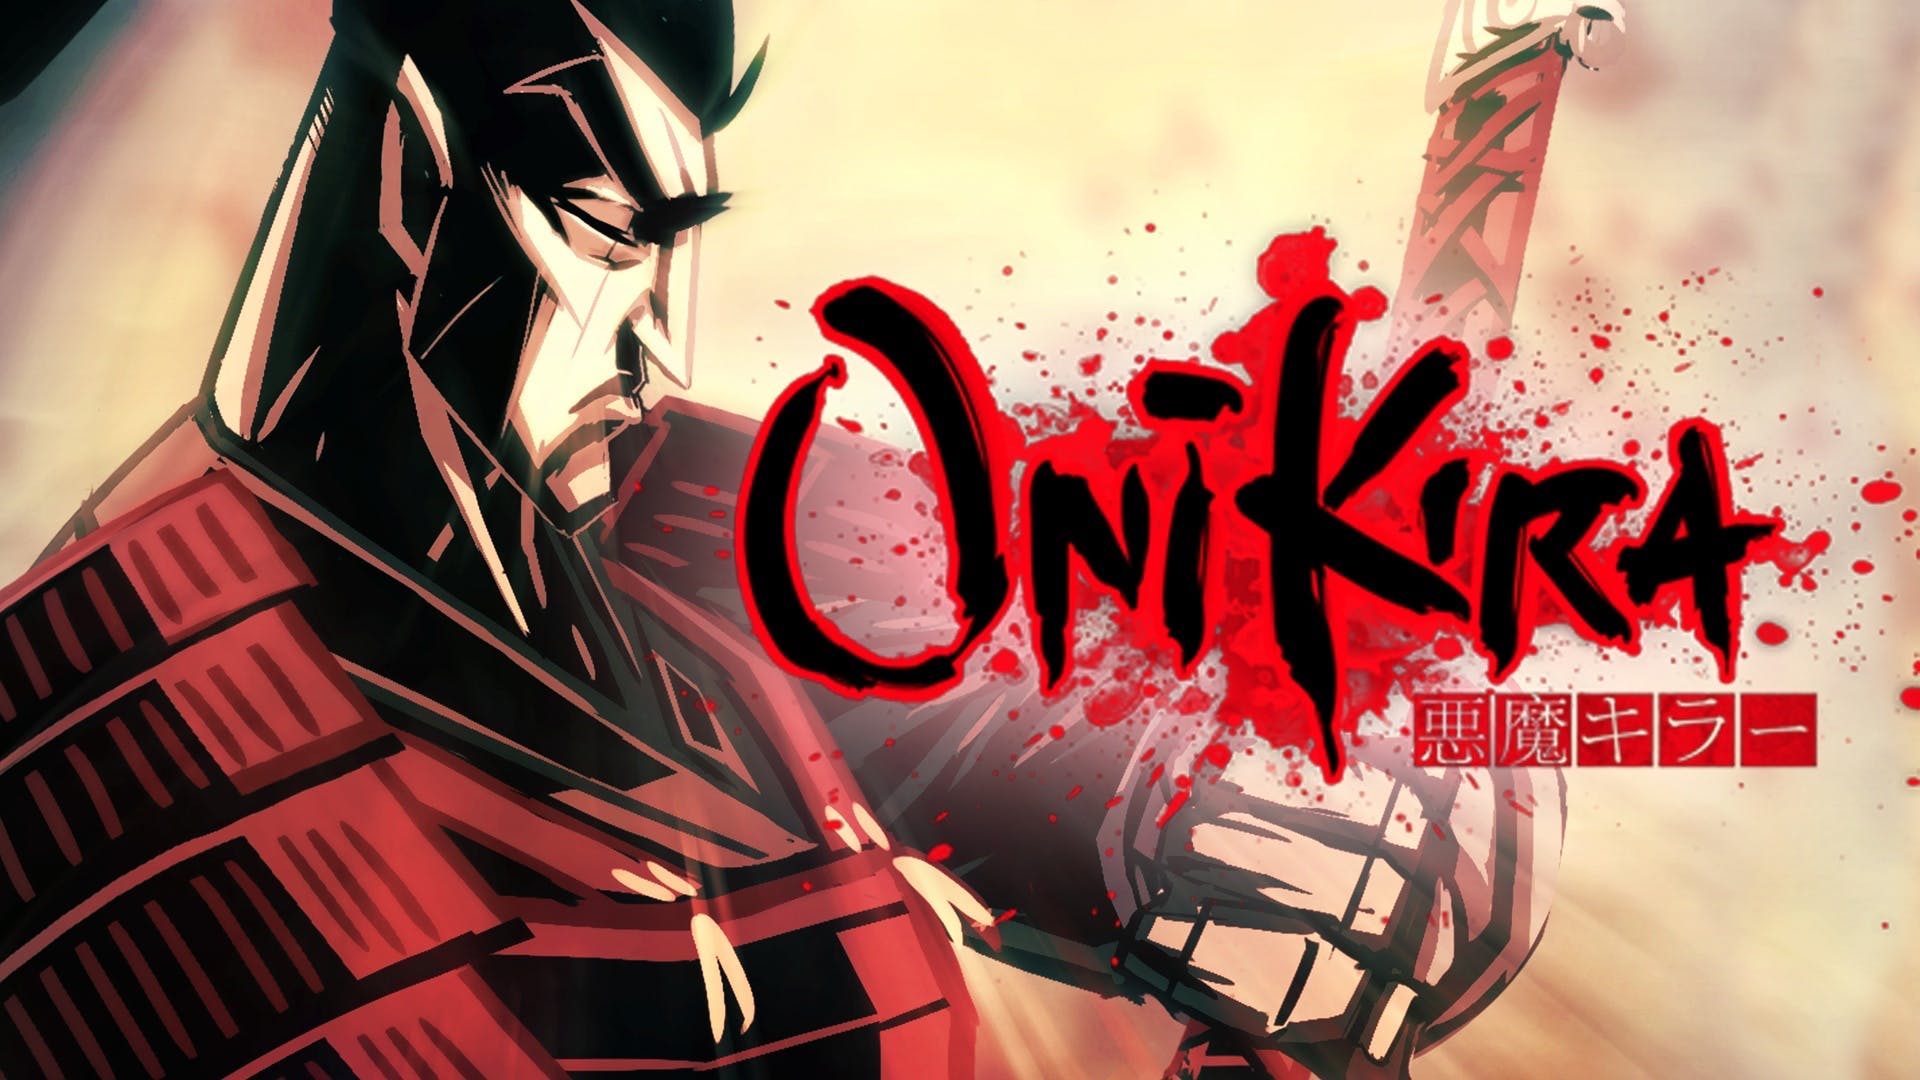 Pc killer. Onikira - Demon Killer. Onikira обложка.